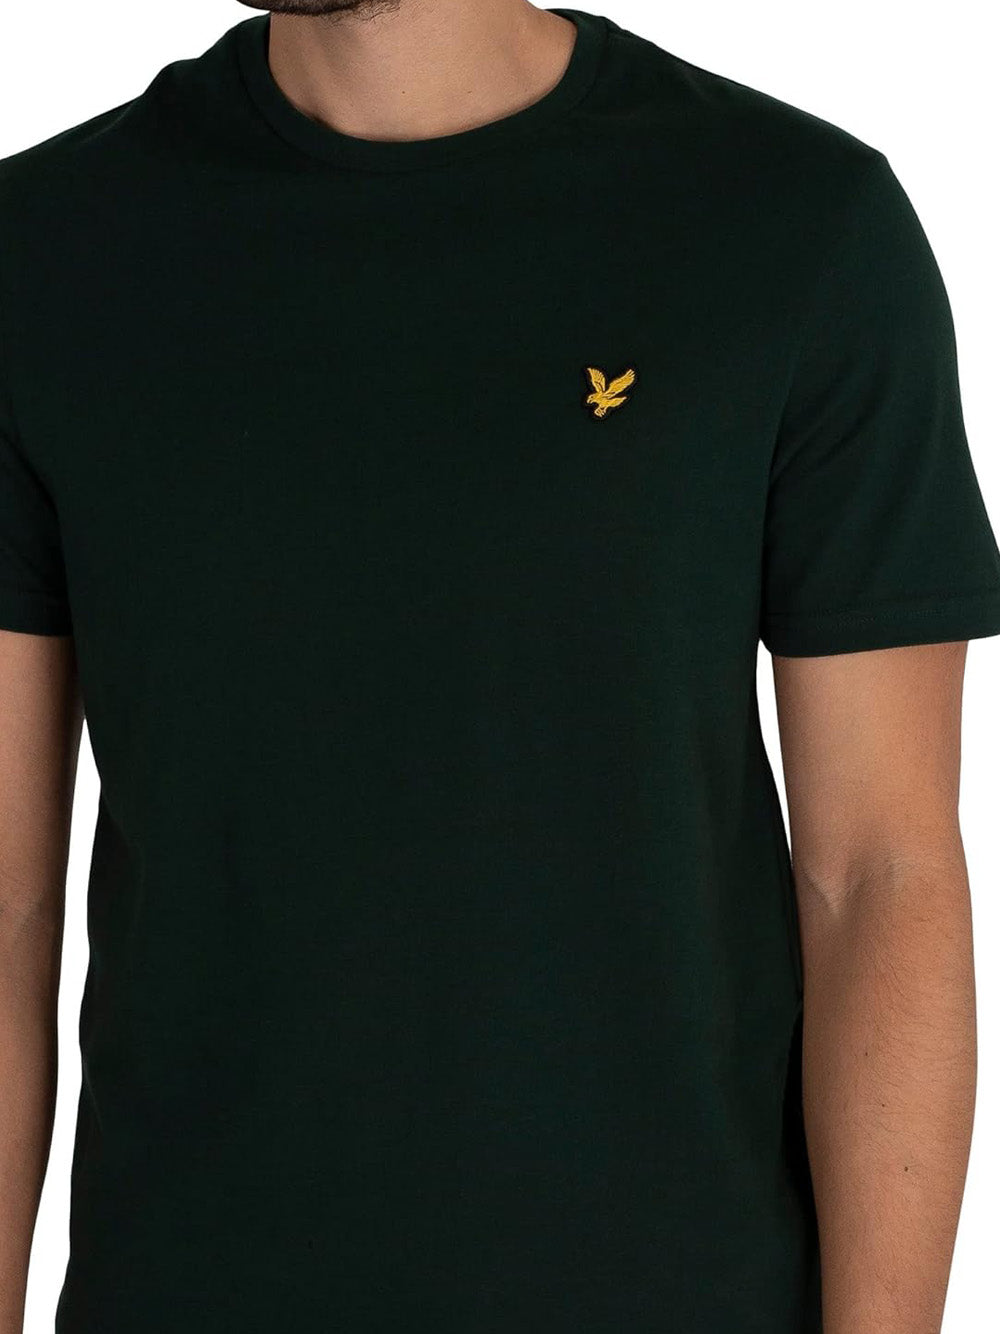 LYLE & SCOTT T-shirt Uomo - Verde